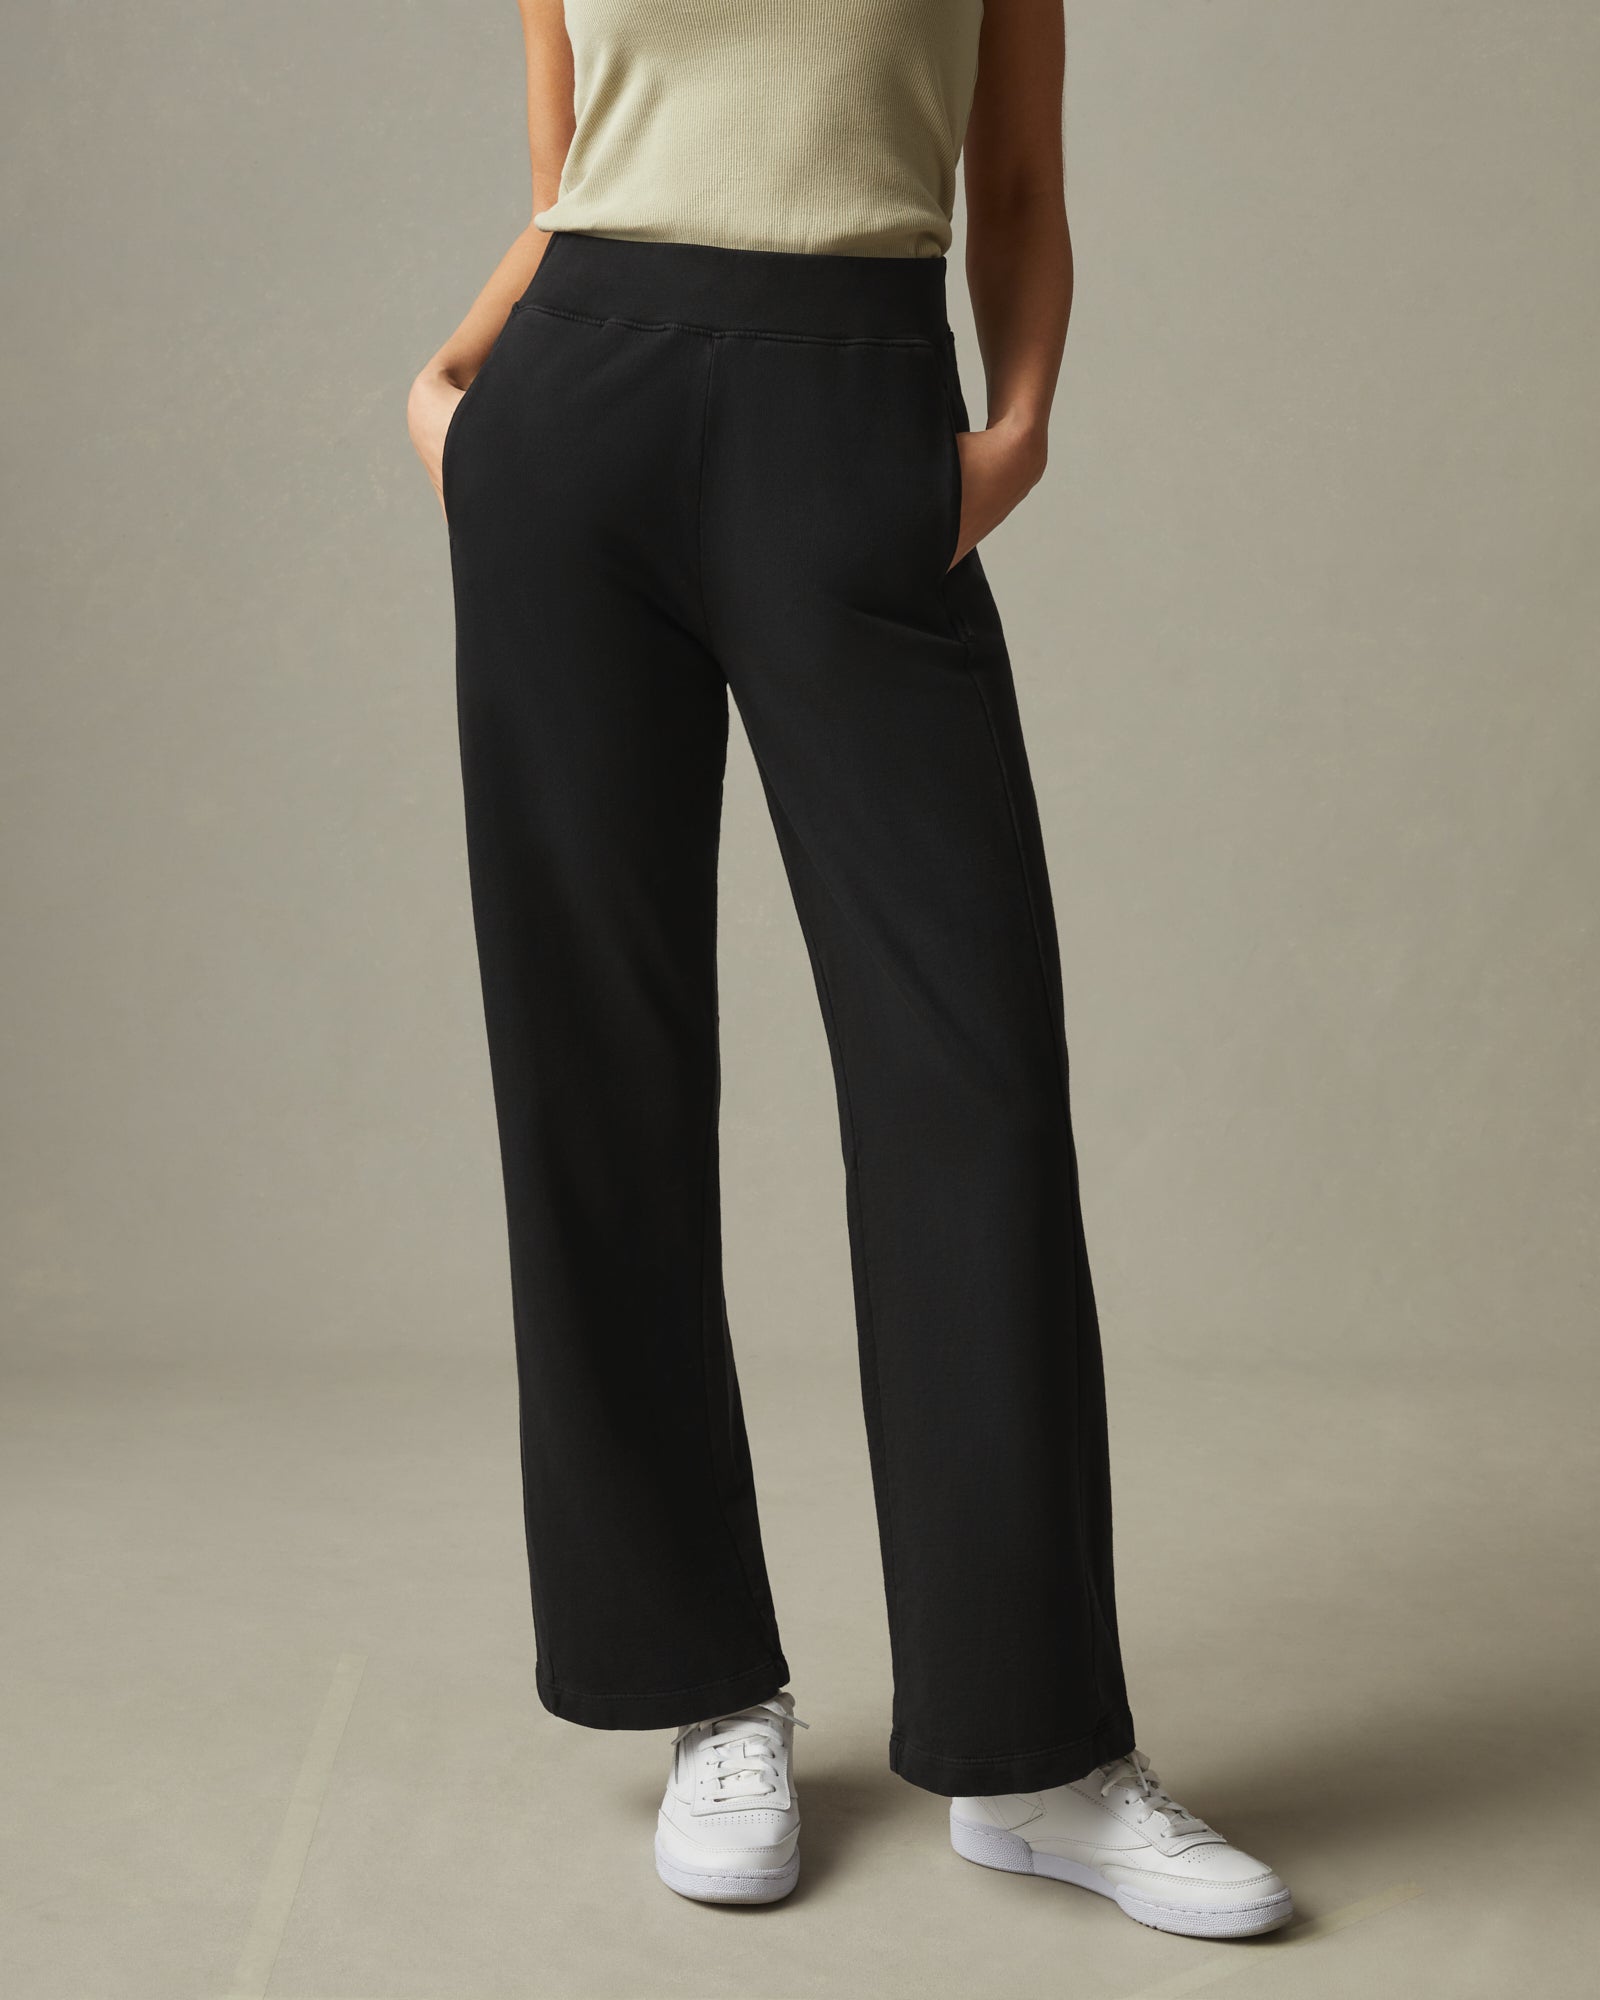 Perfect Fit Pants, Straight-Leg Crop | Cropped & Capri at L.L.Bean